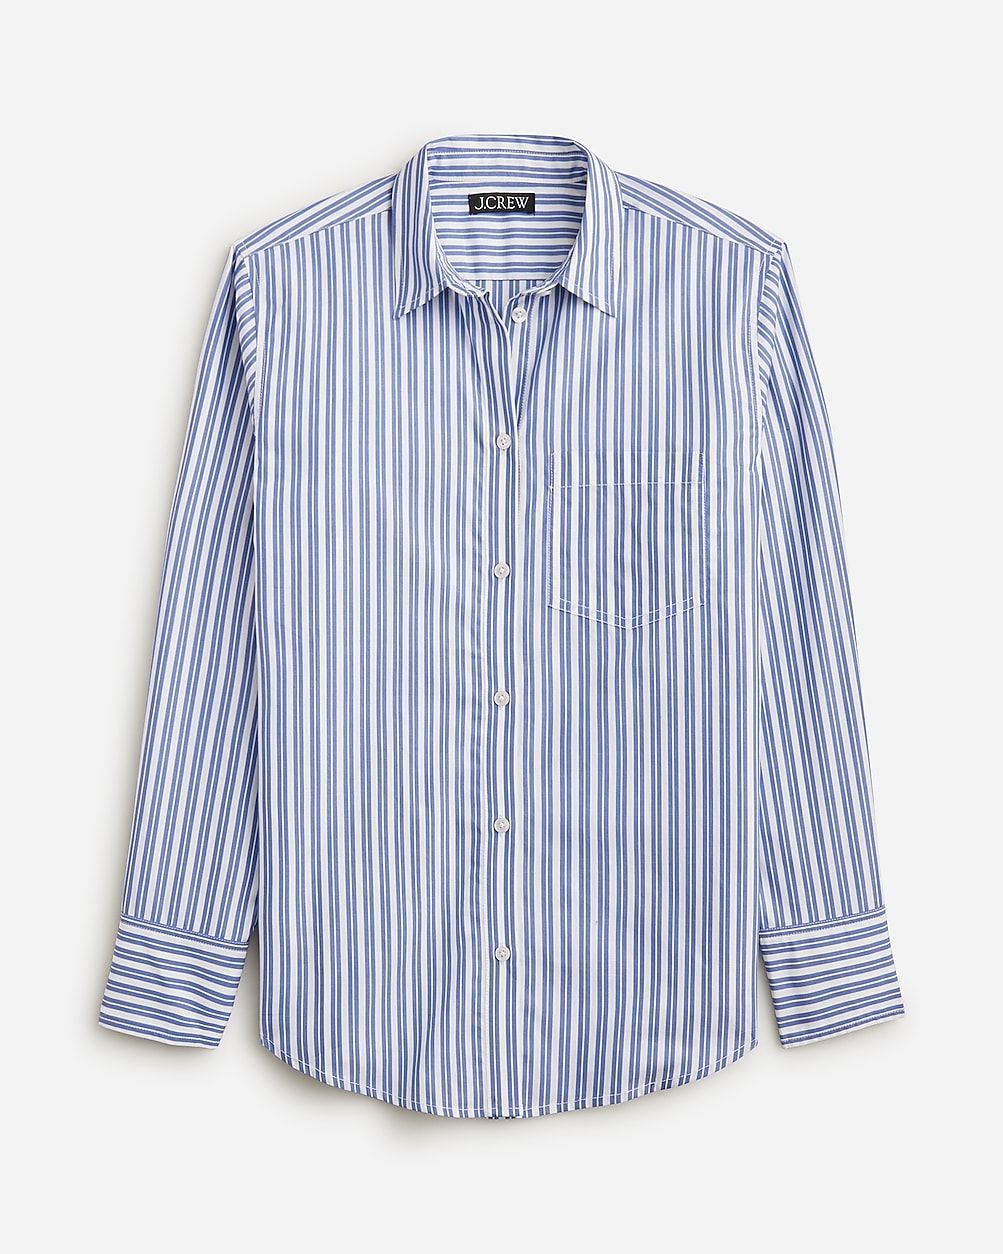 Garçon classic shirt in stripe | J.Crew US